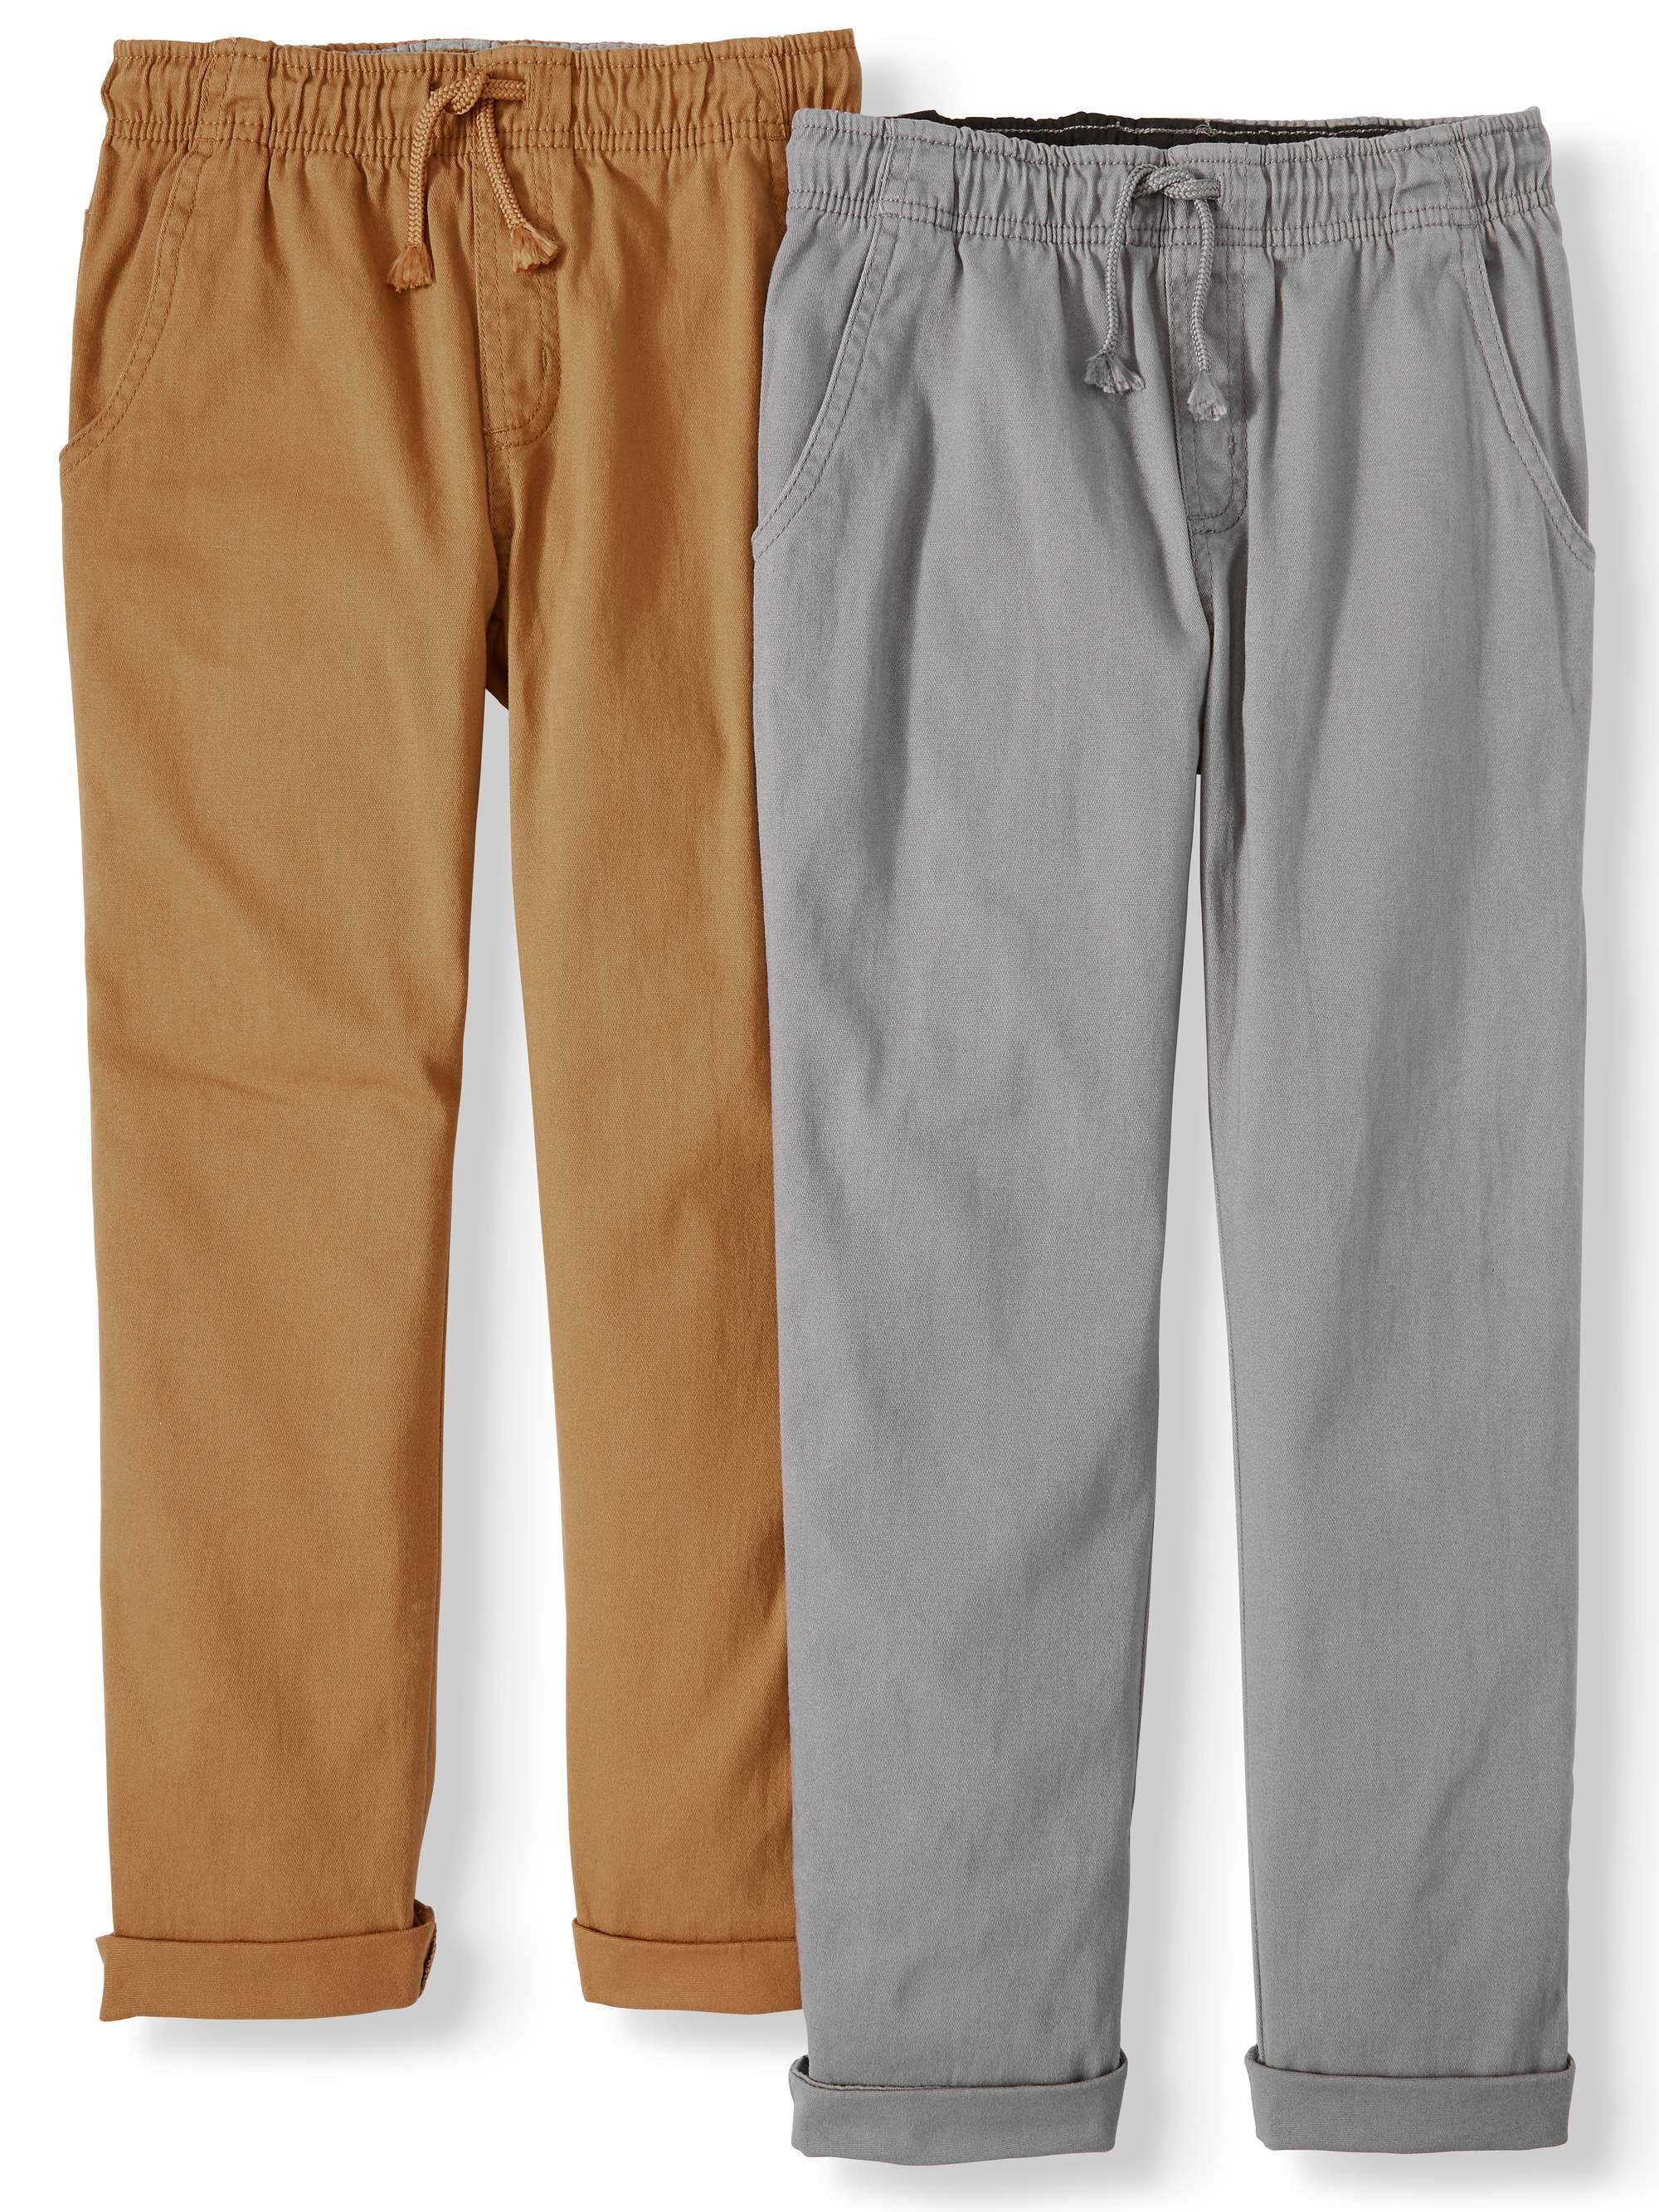 Wonder Nation Boys Pull-On Pants, 2-Pack, Sizes 4-18 & Husky - Walmart.com